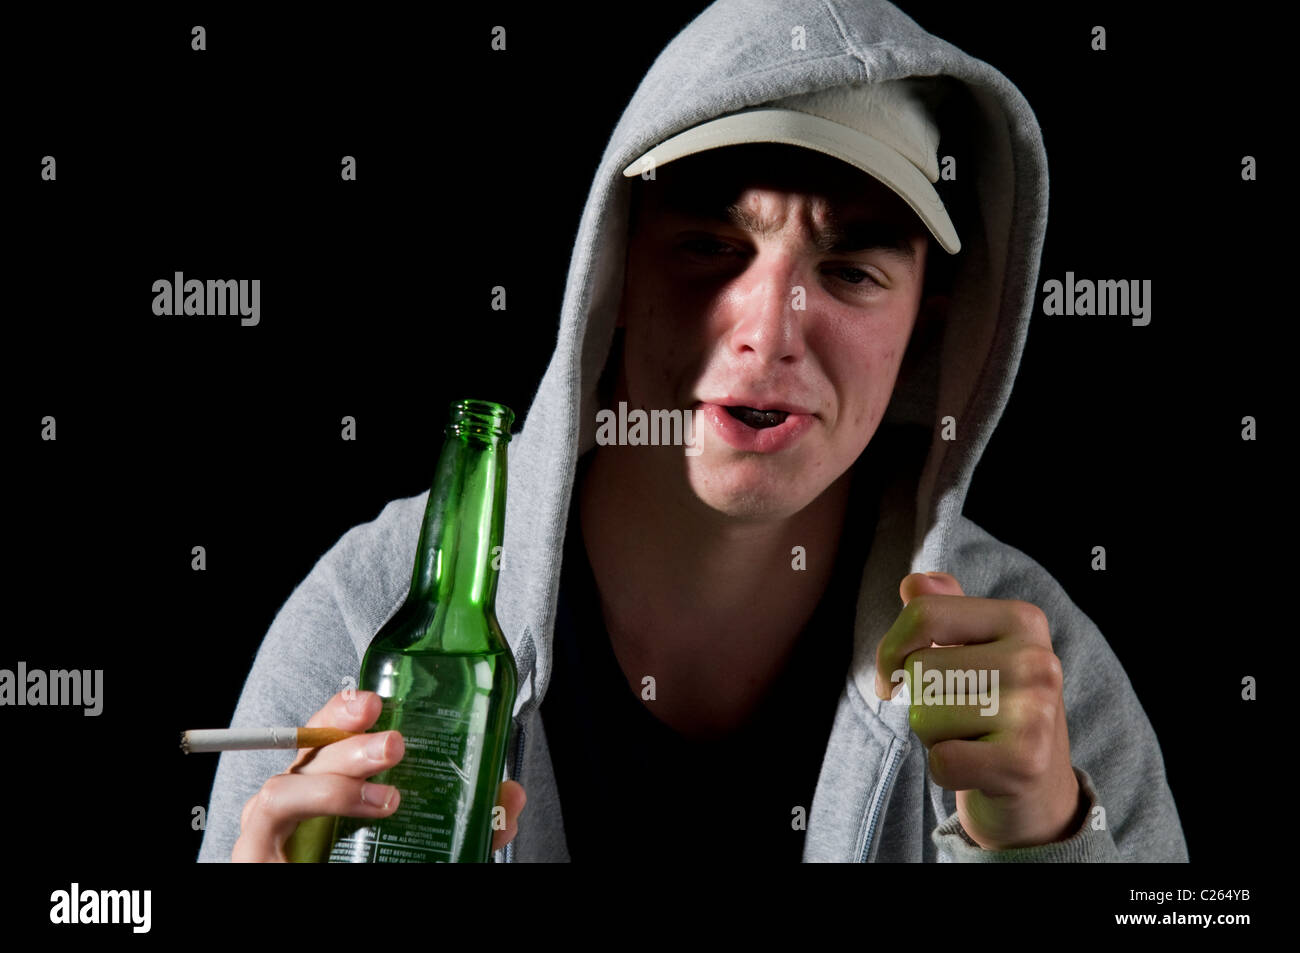 Teen boy smoking and drinking Stock Photo